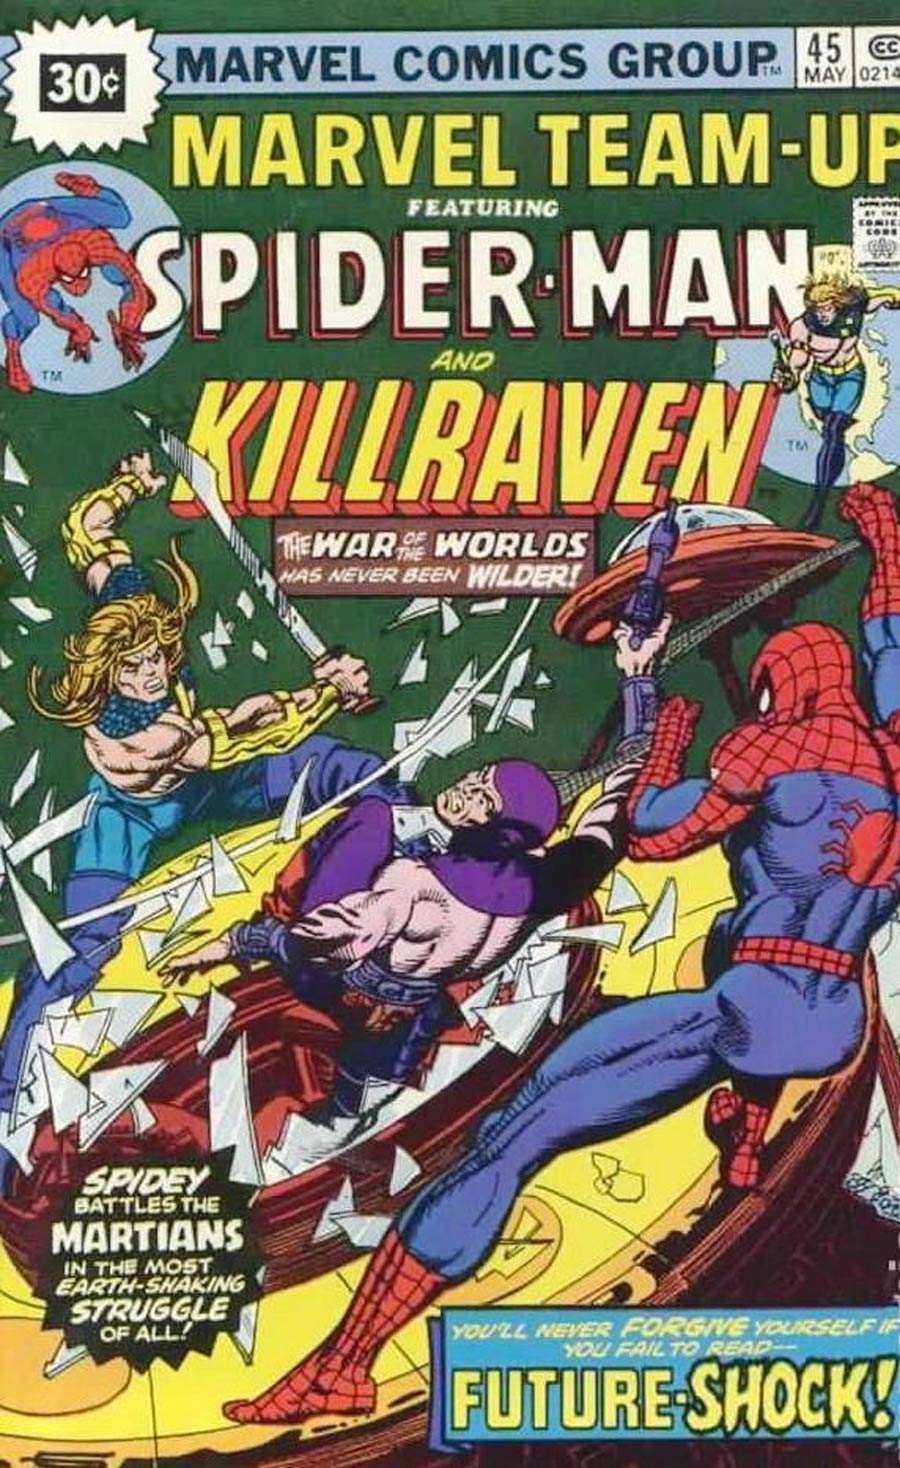 Marvel Team-Up #45 Cover B 30-Cent Variant Cover